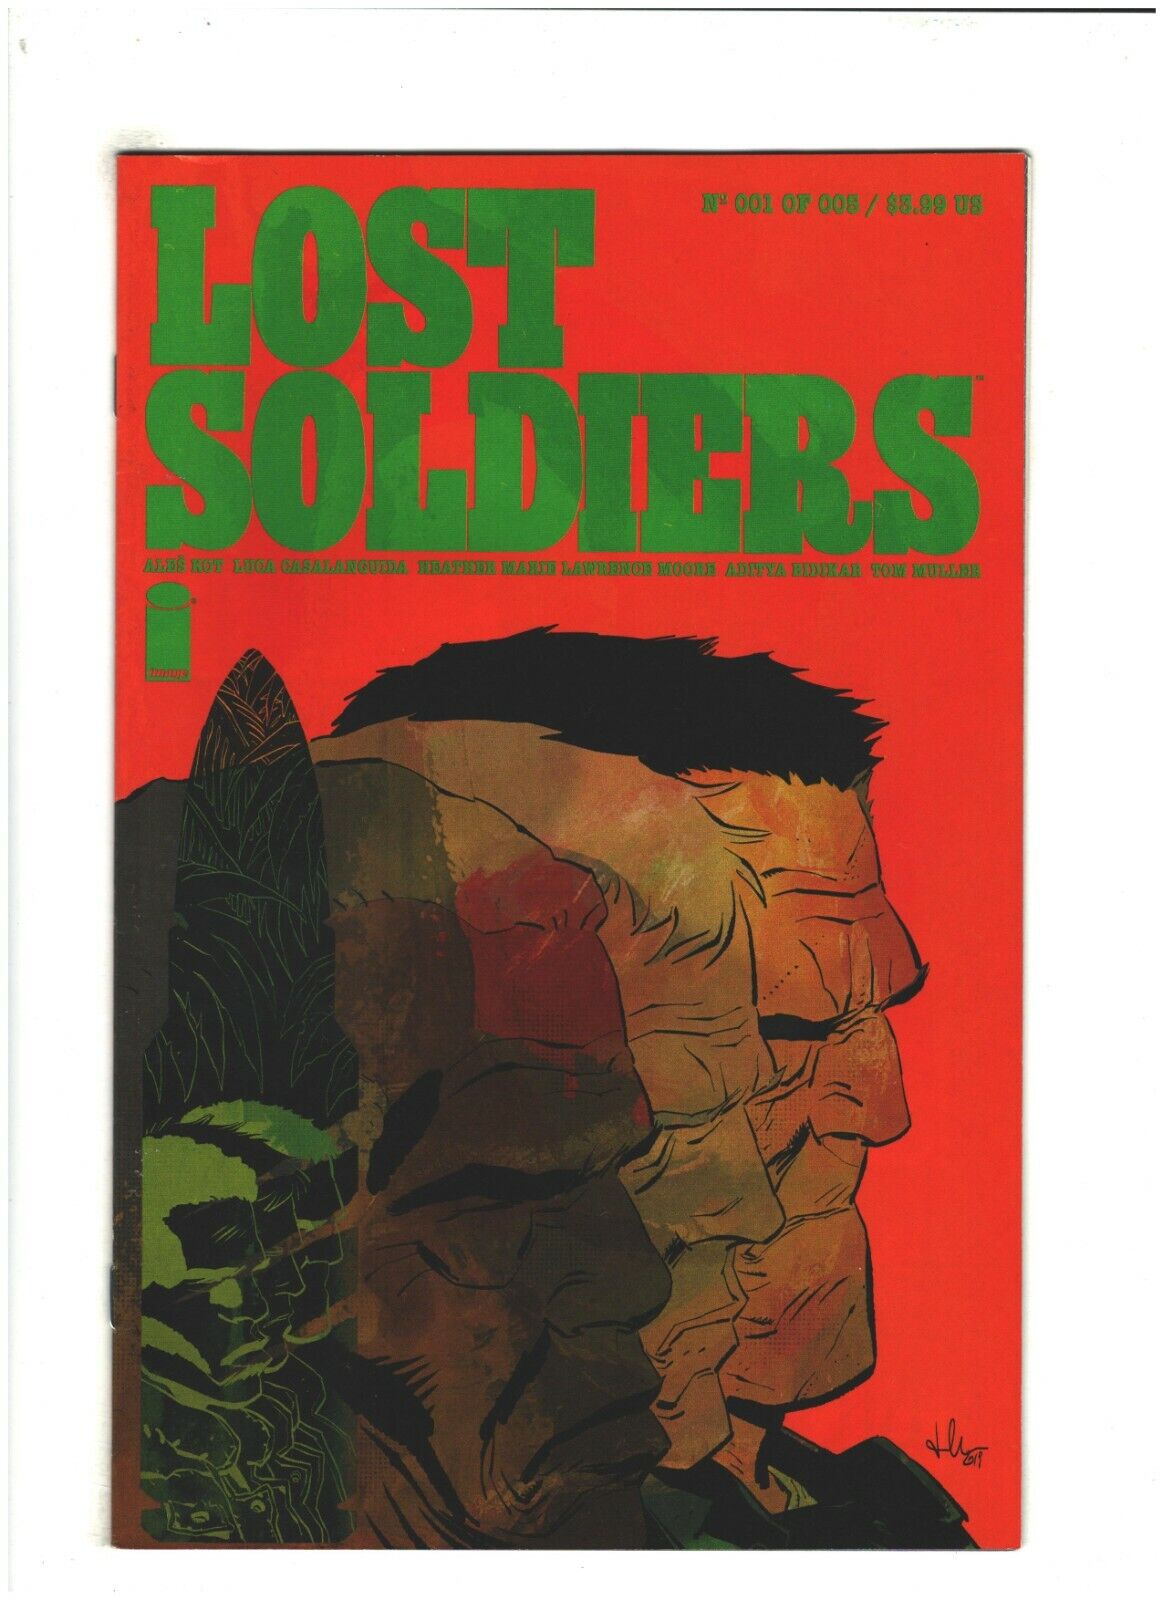 Lost Soldiers #1 VF/NM 9.0 Image Comics 2020 Ales Kot